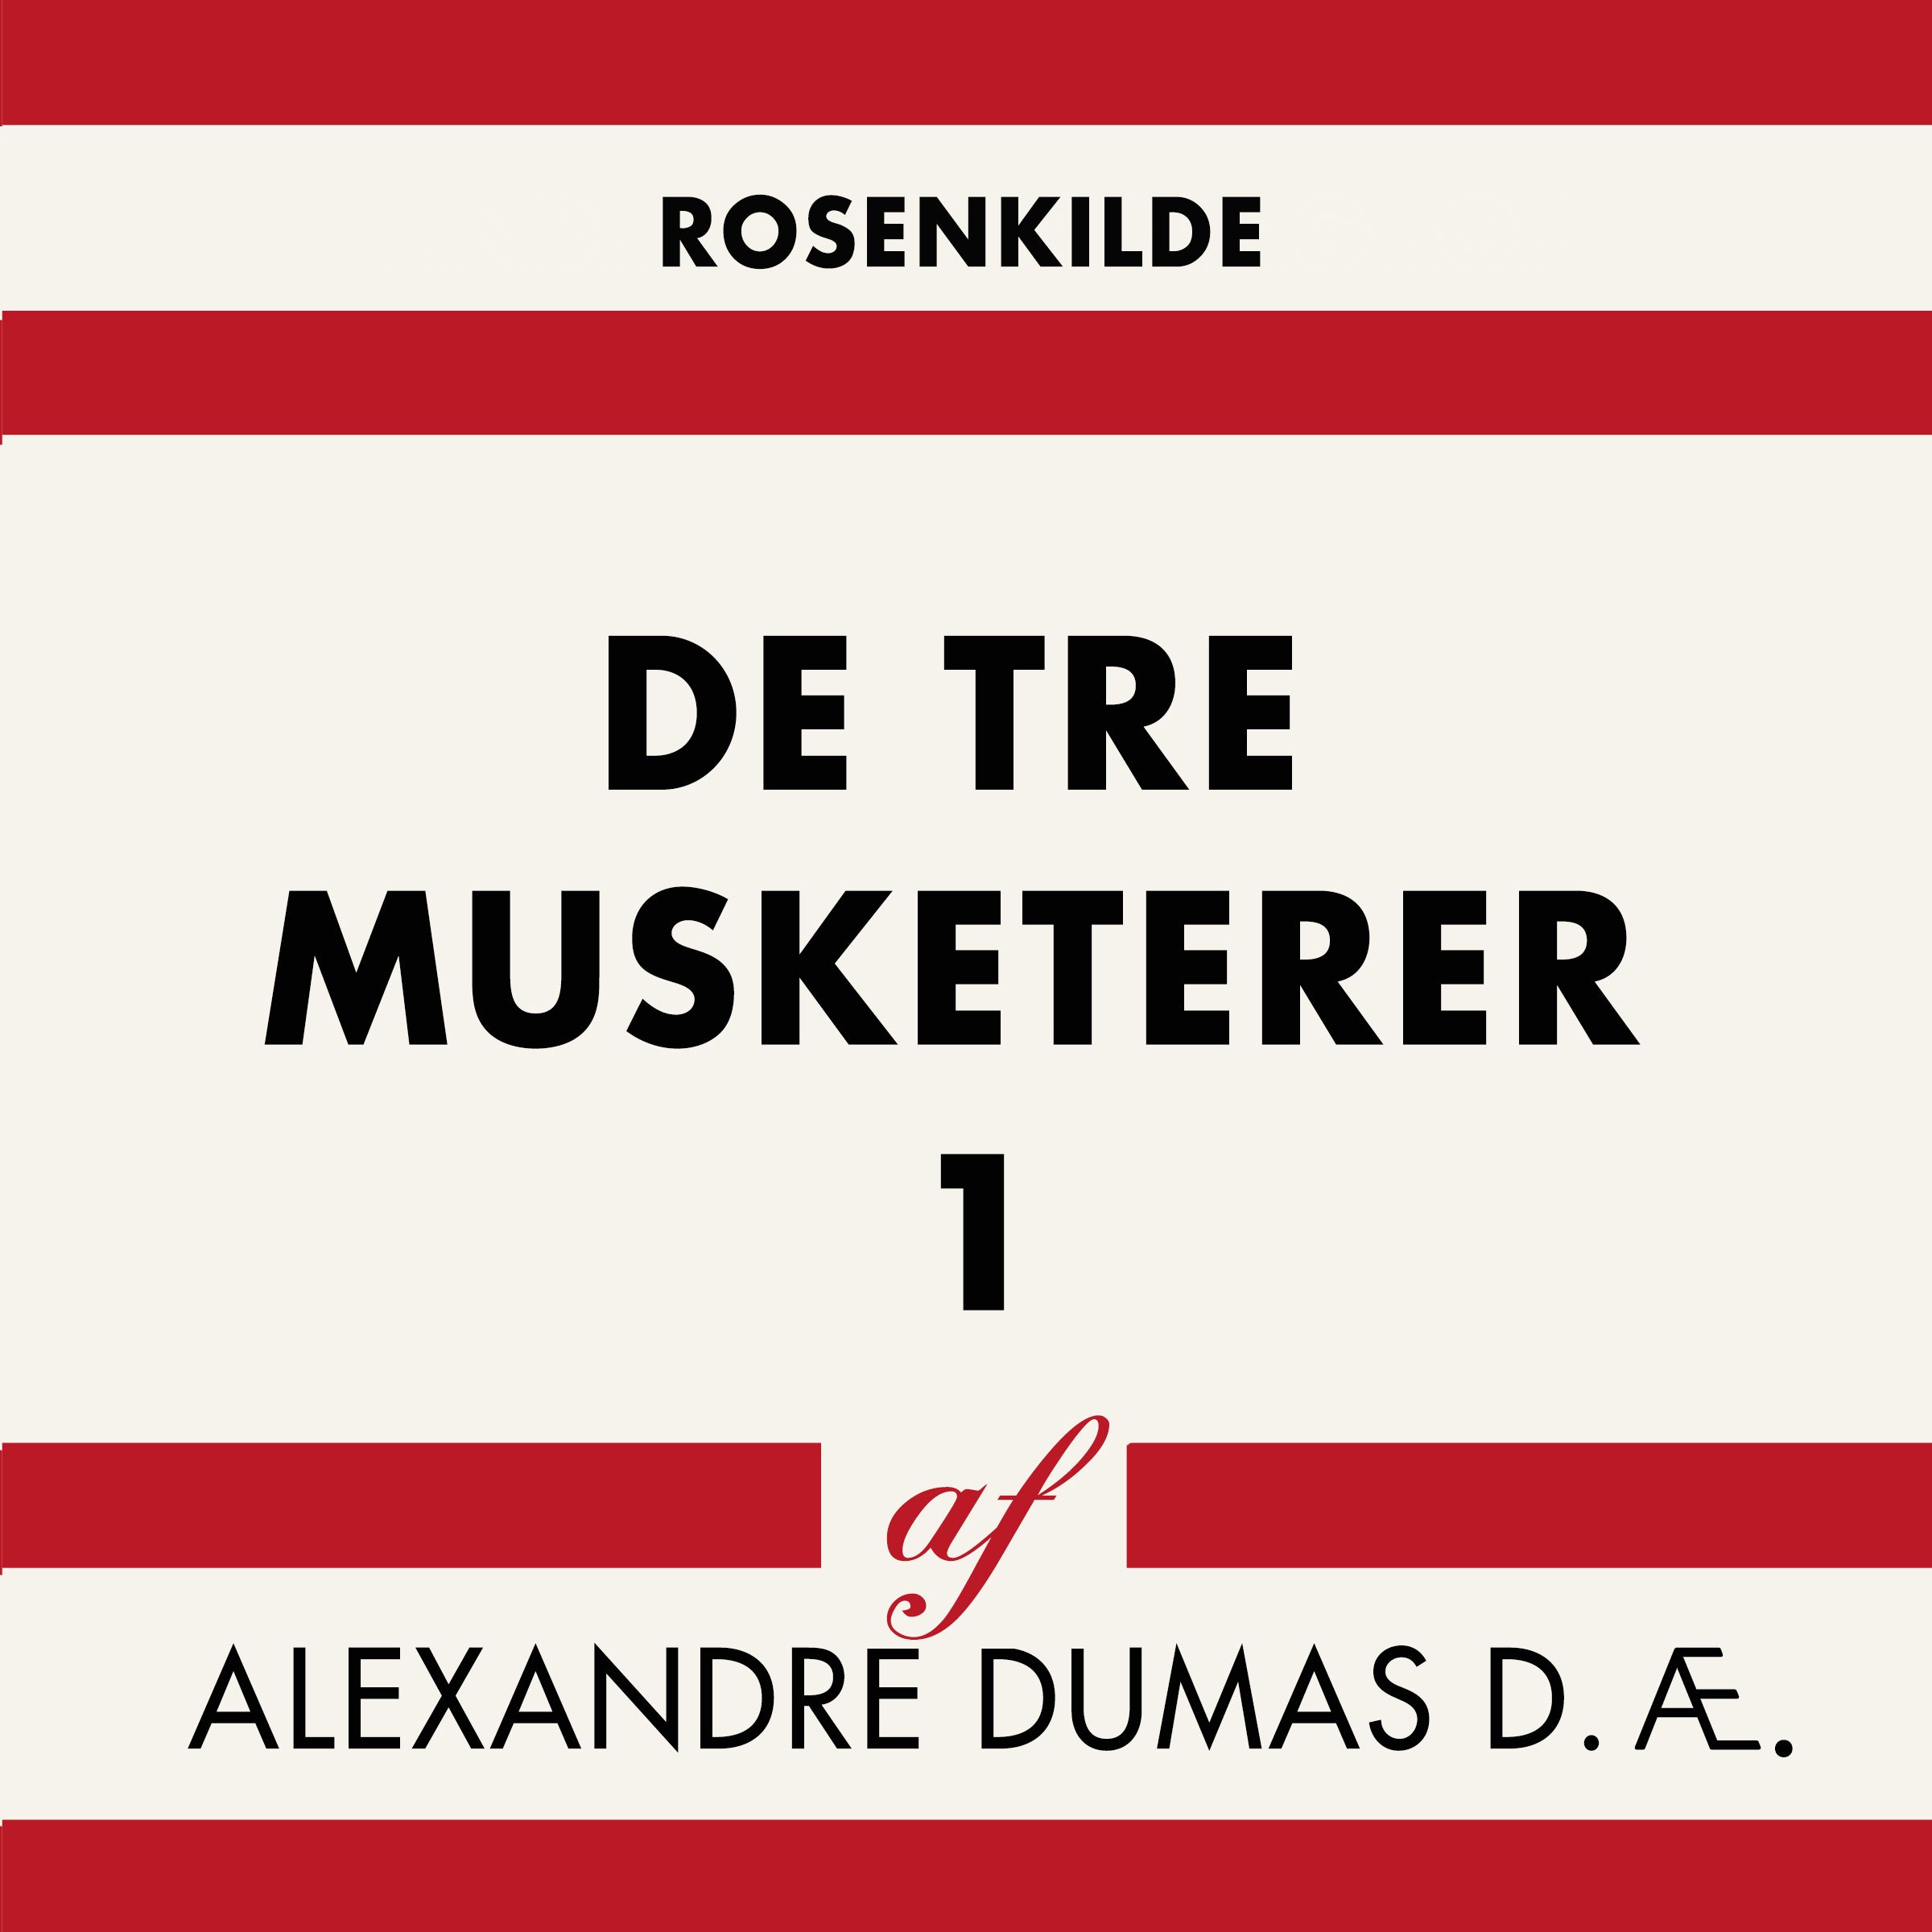 De tre musketerer 1, ljudbok av Alexandre Dumas D.Æ.